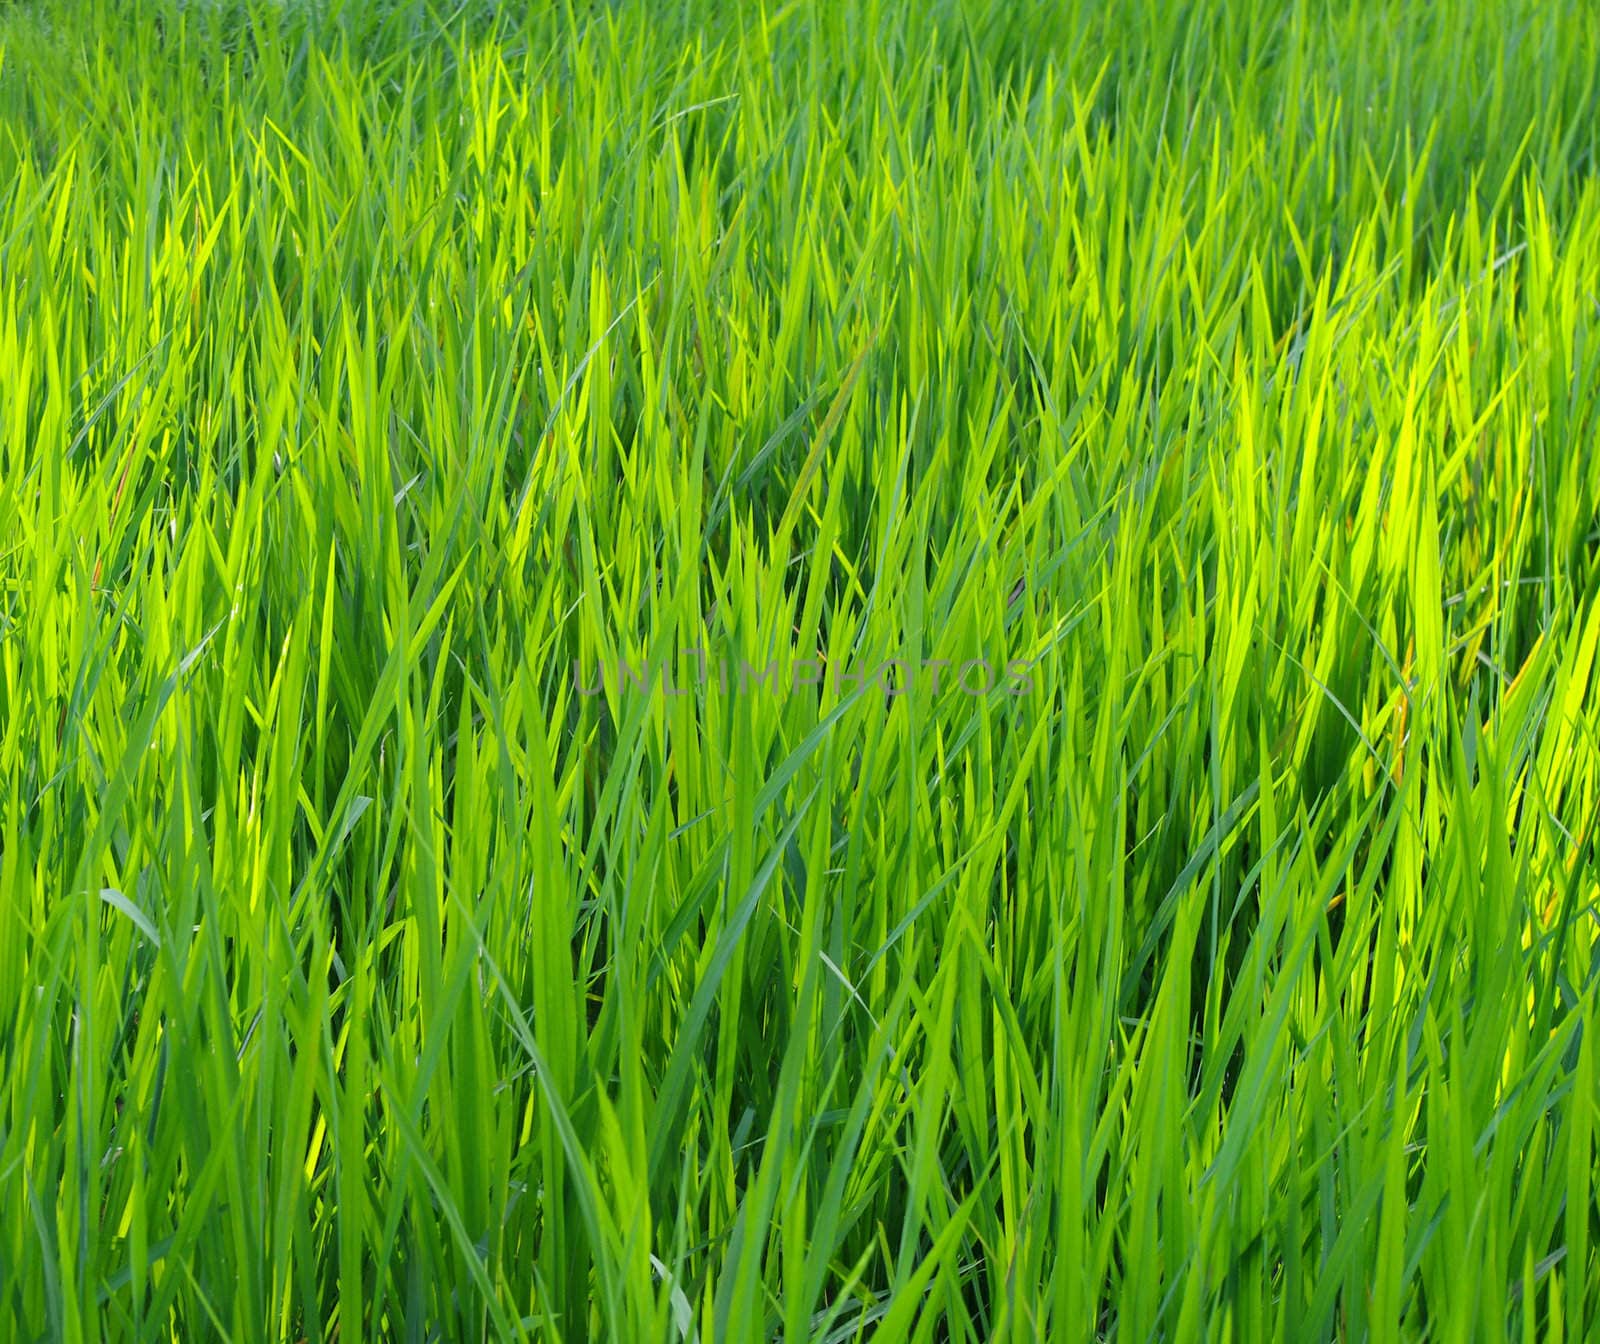 Green nature paddy field background, Bali, Indonesia.